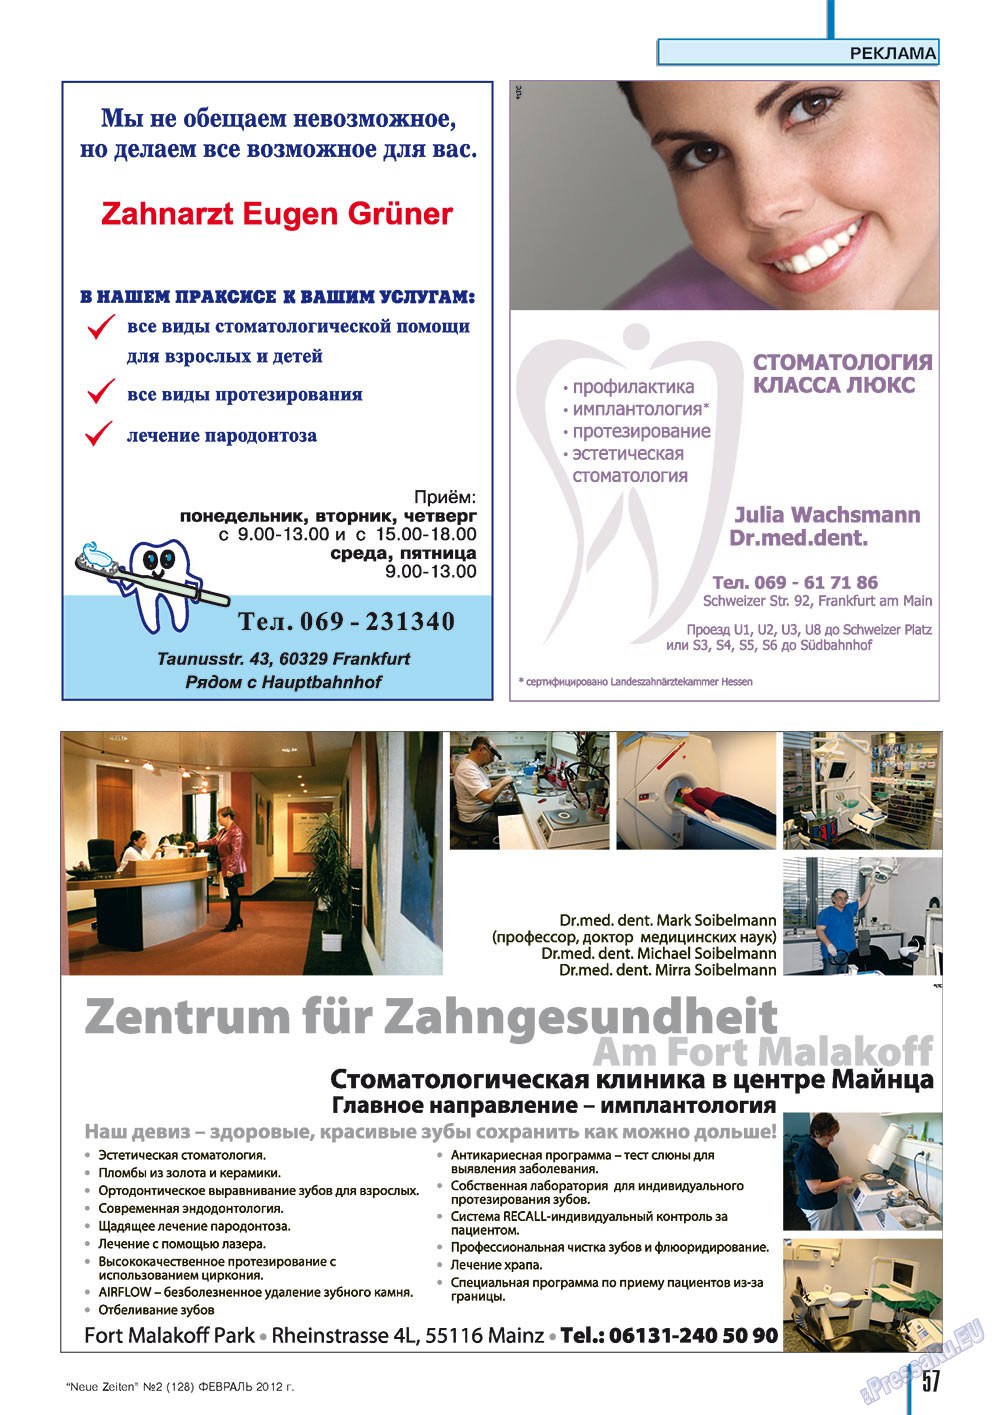 Neue Zeiten (журнал). 2012 год, номер 2, стр. 57